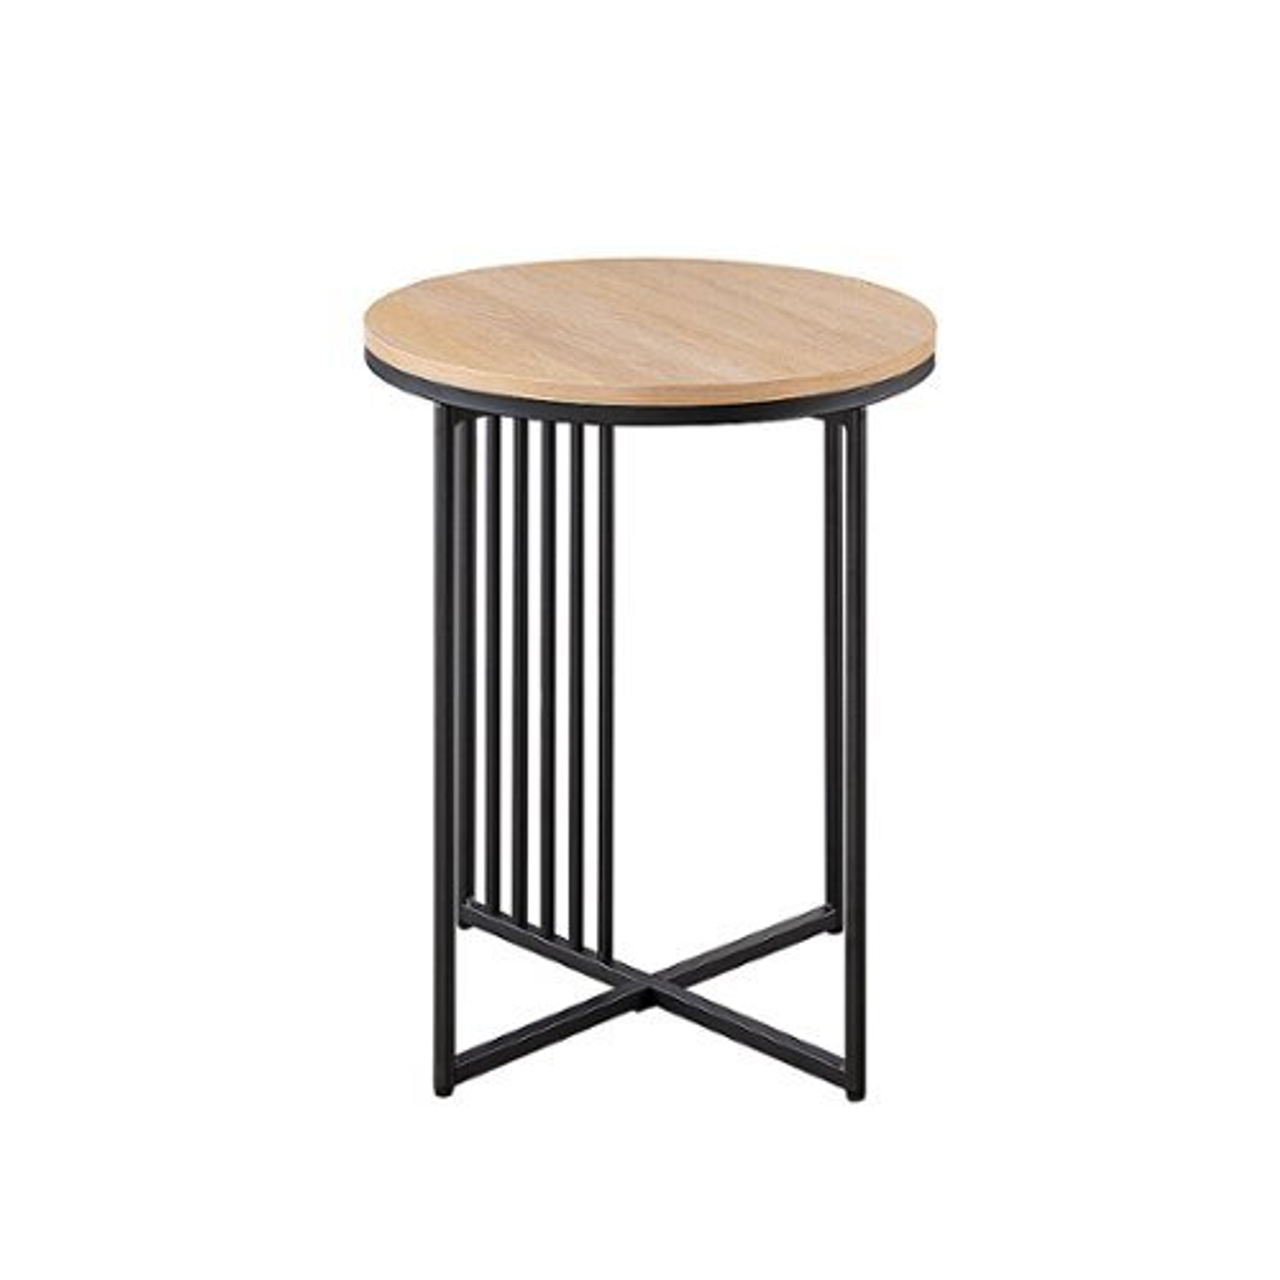 Walker Edison - Contemporary Metal and Wood Round Side Table - Coastal Oak/Black